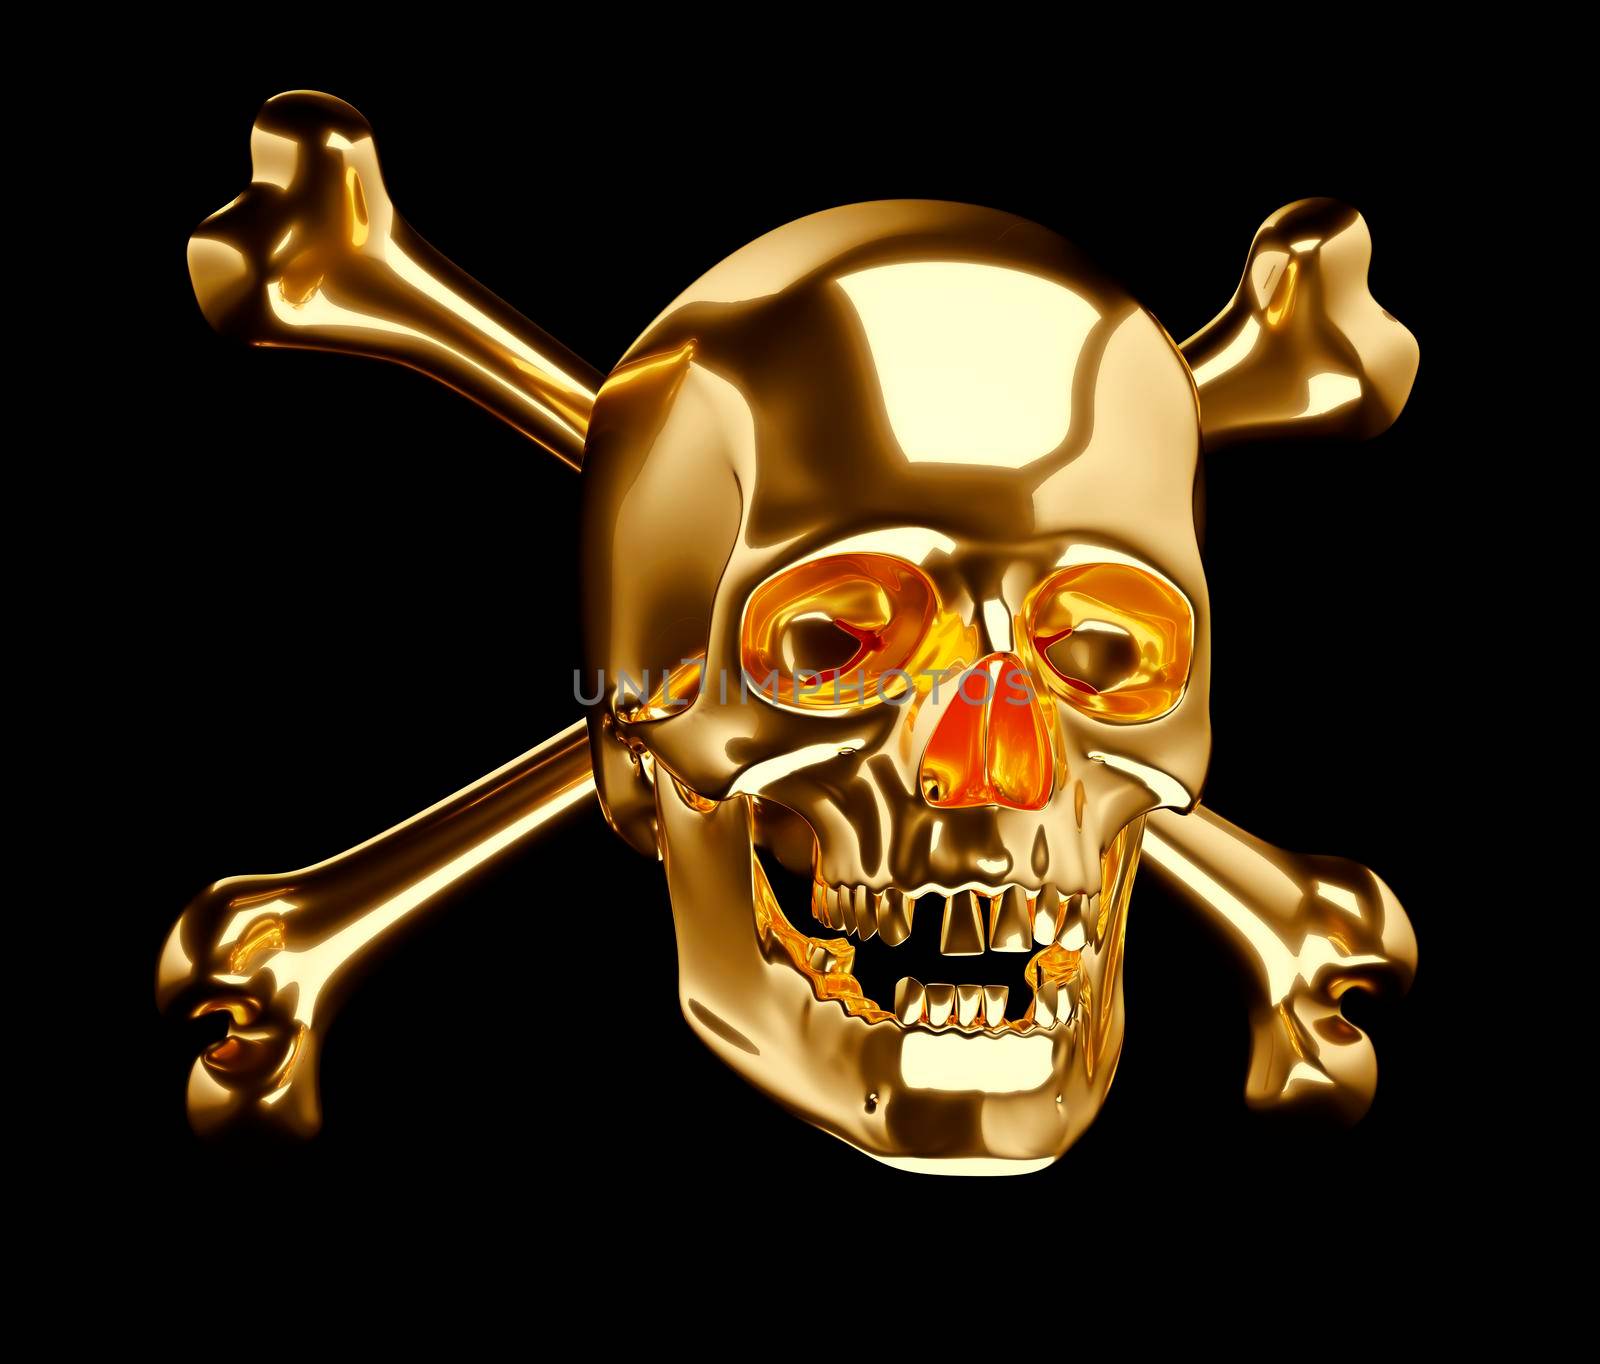 Golden Skull with cross bones or totenkopf isolated on black 3d render 3d illustration